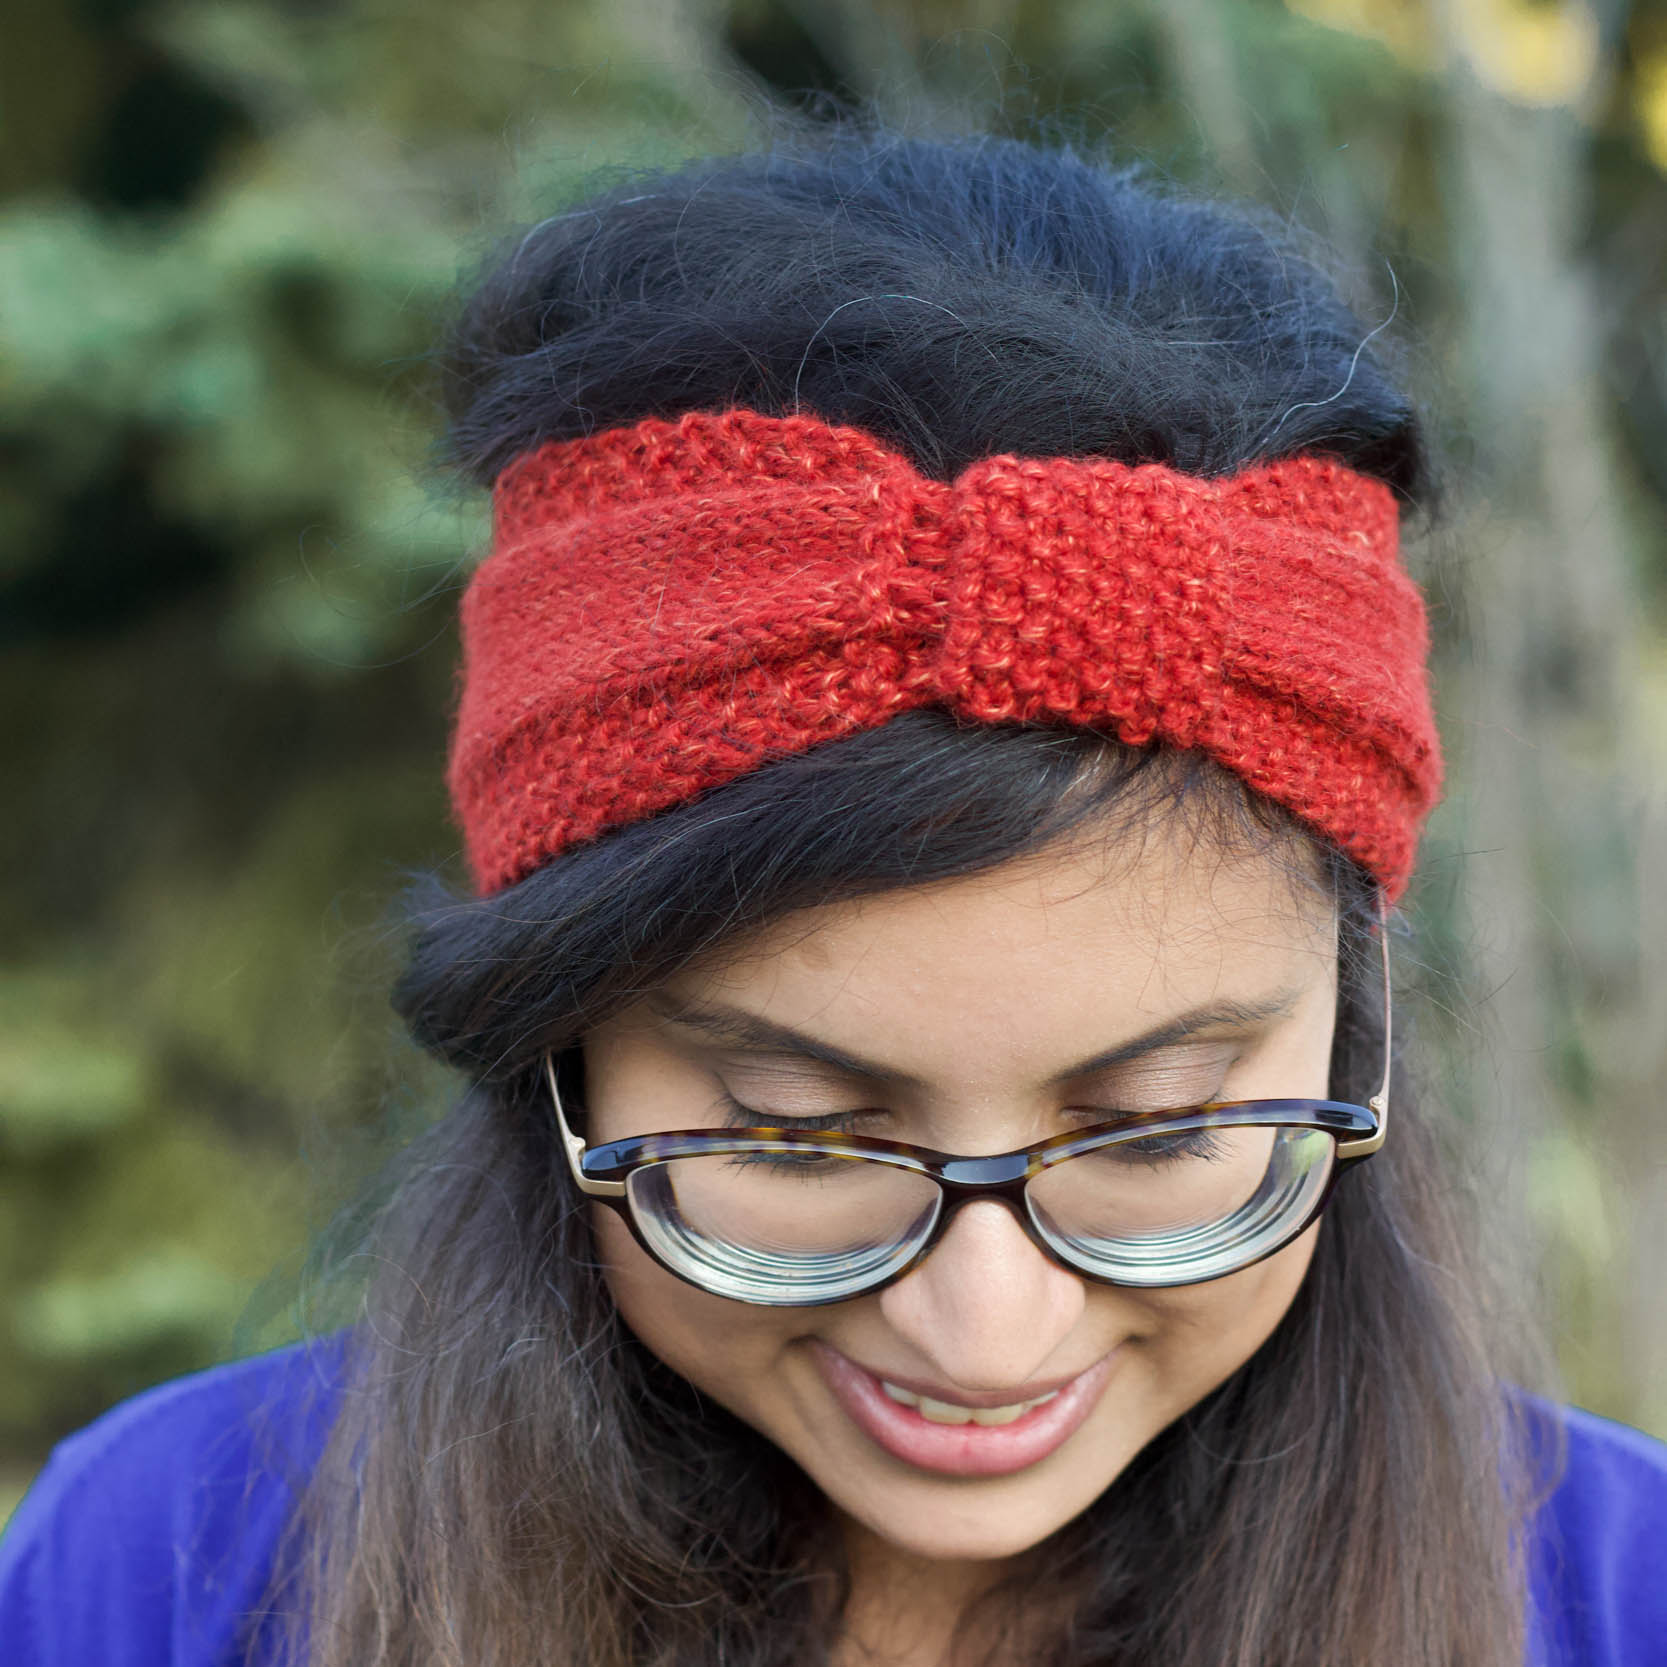 The Dotted Headband Knit Pattern